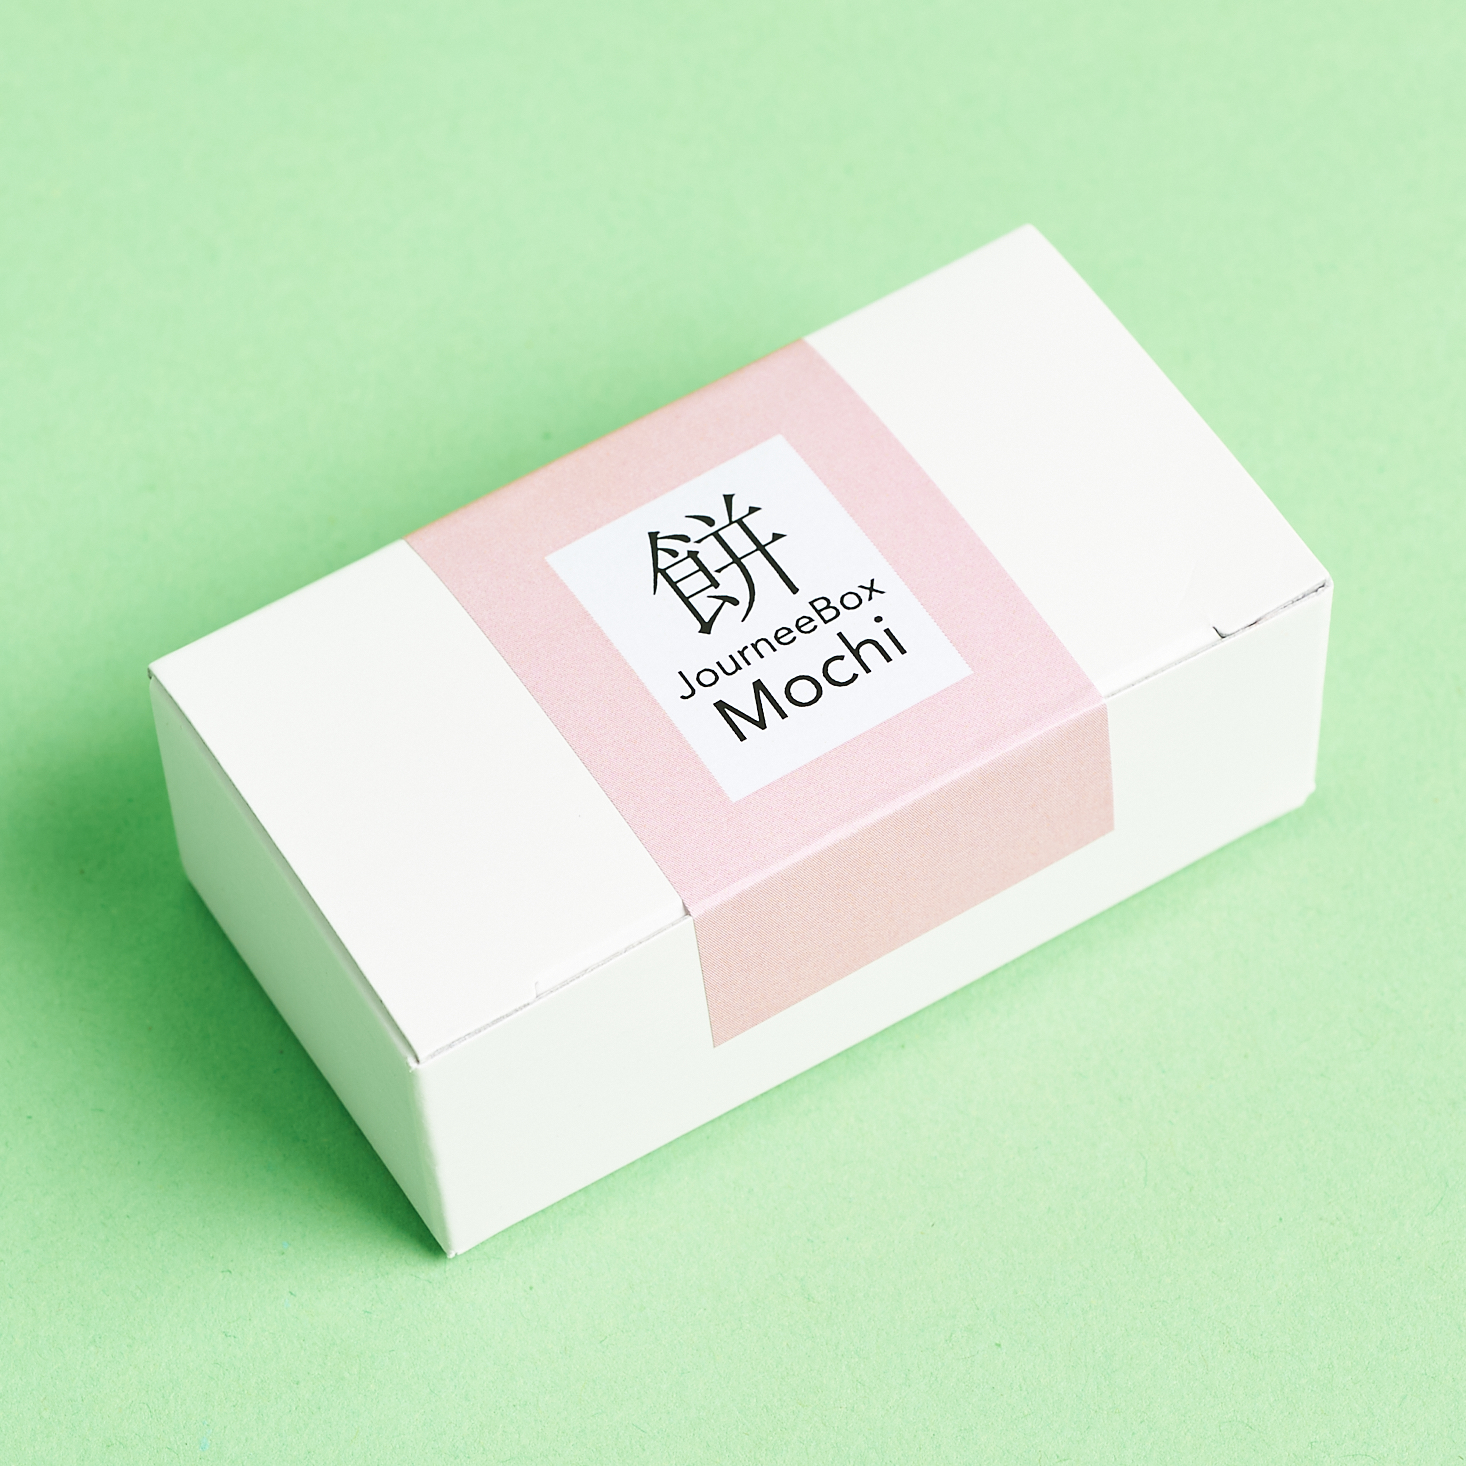 Mochi box from Journee Box Kyoto